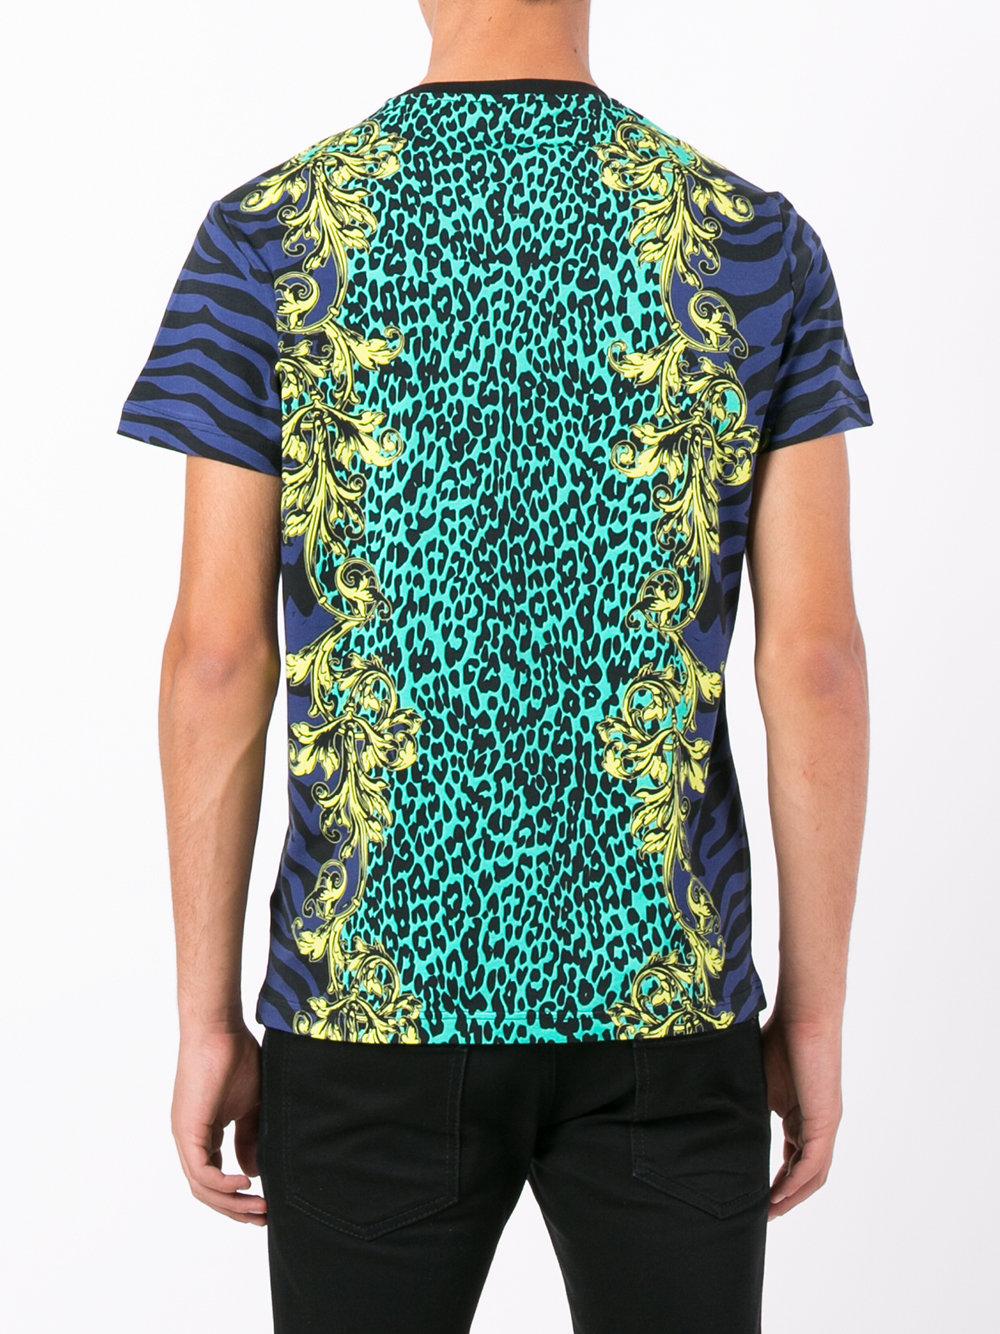 Versace animal print t shirt